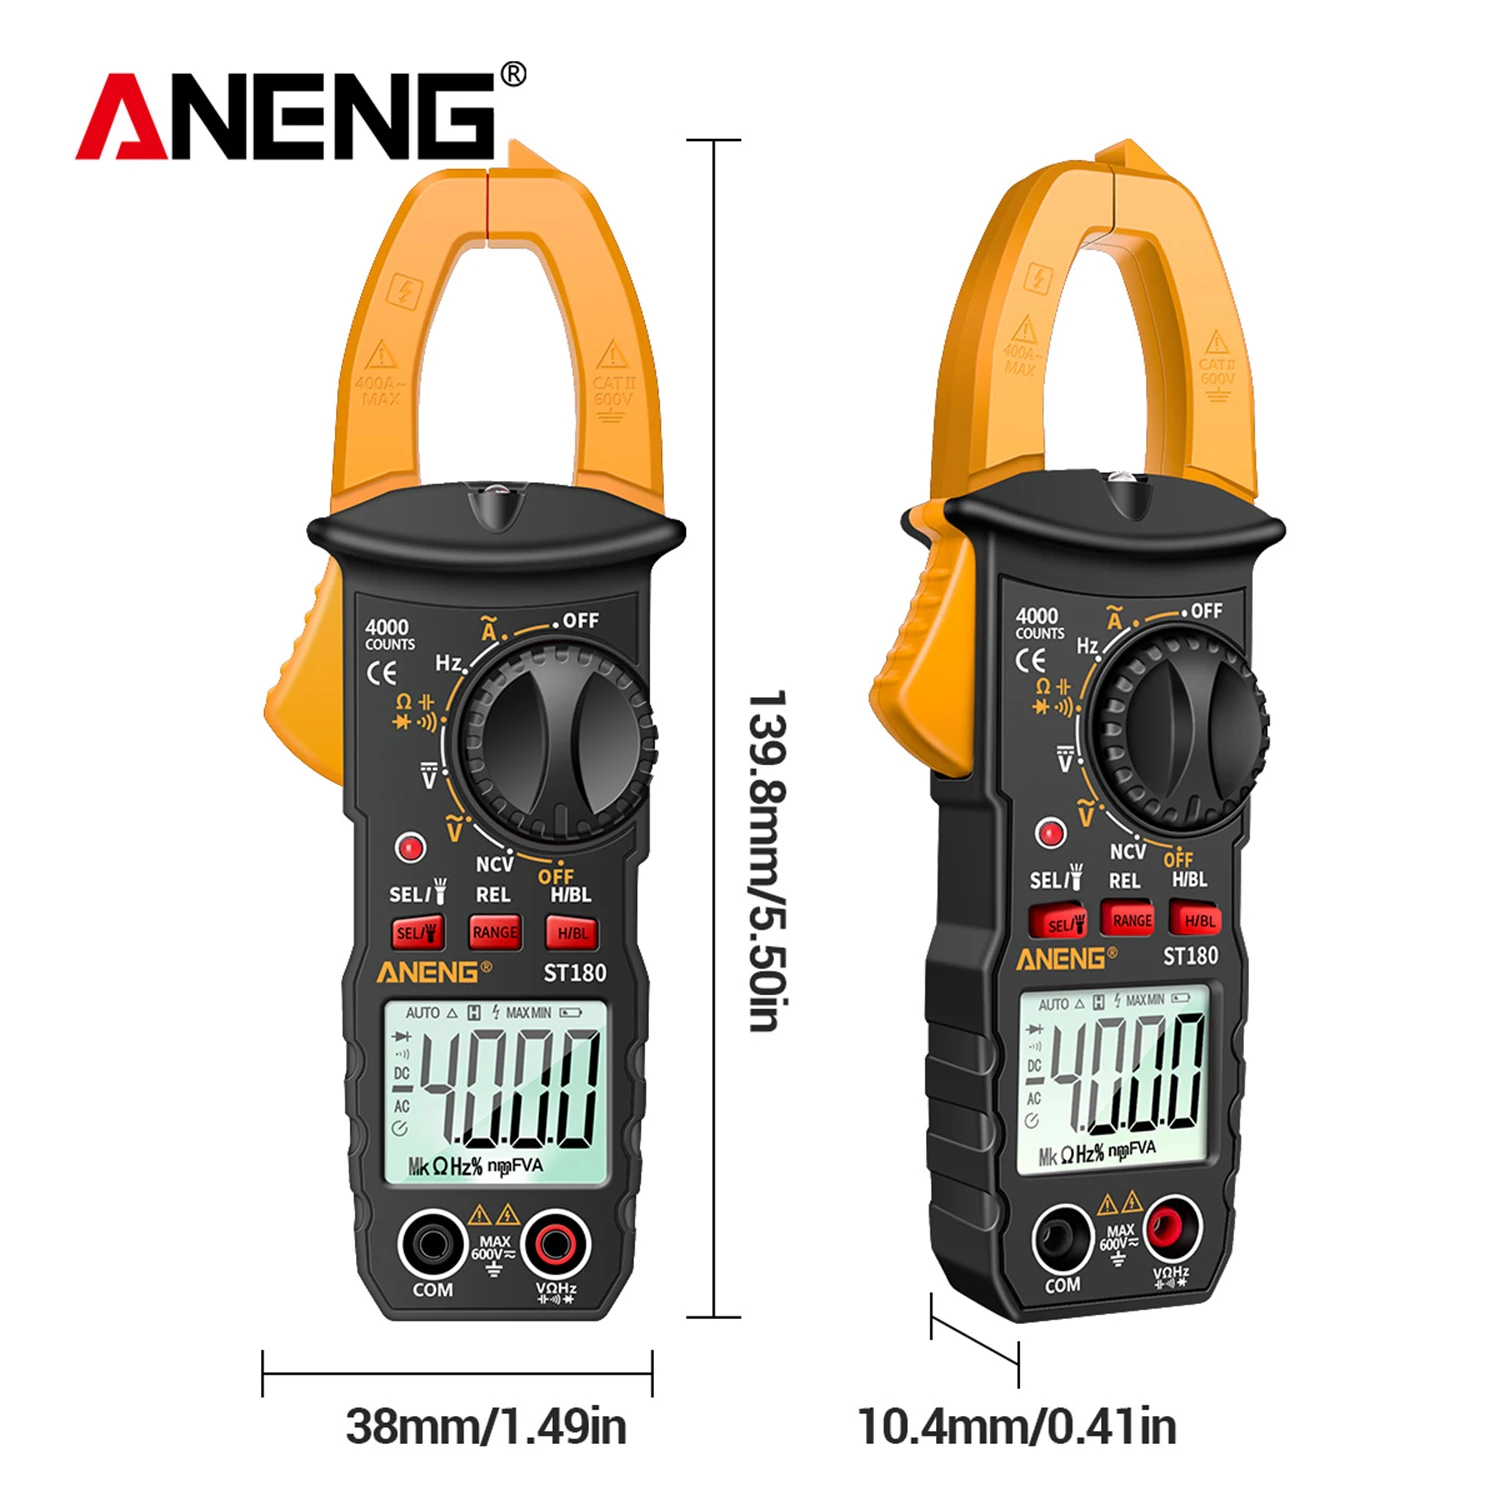 4000 Count Digital Clamp Meter Multimeter Ncv Tester Universal Meter Tester Current Clamp Tester For ANENG ST180